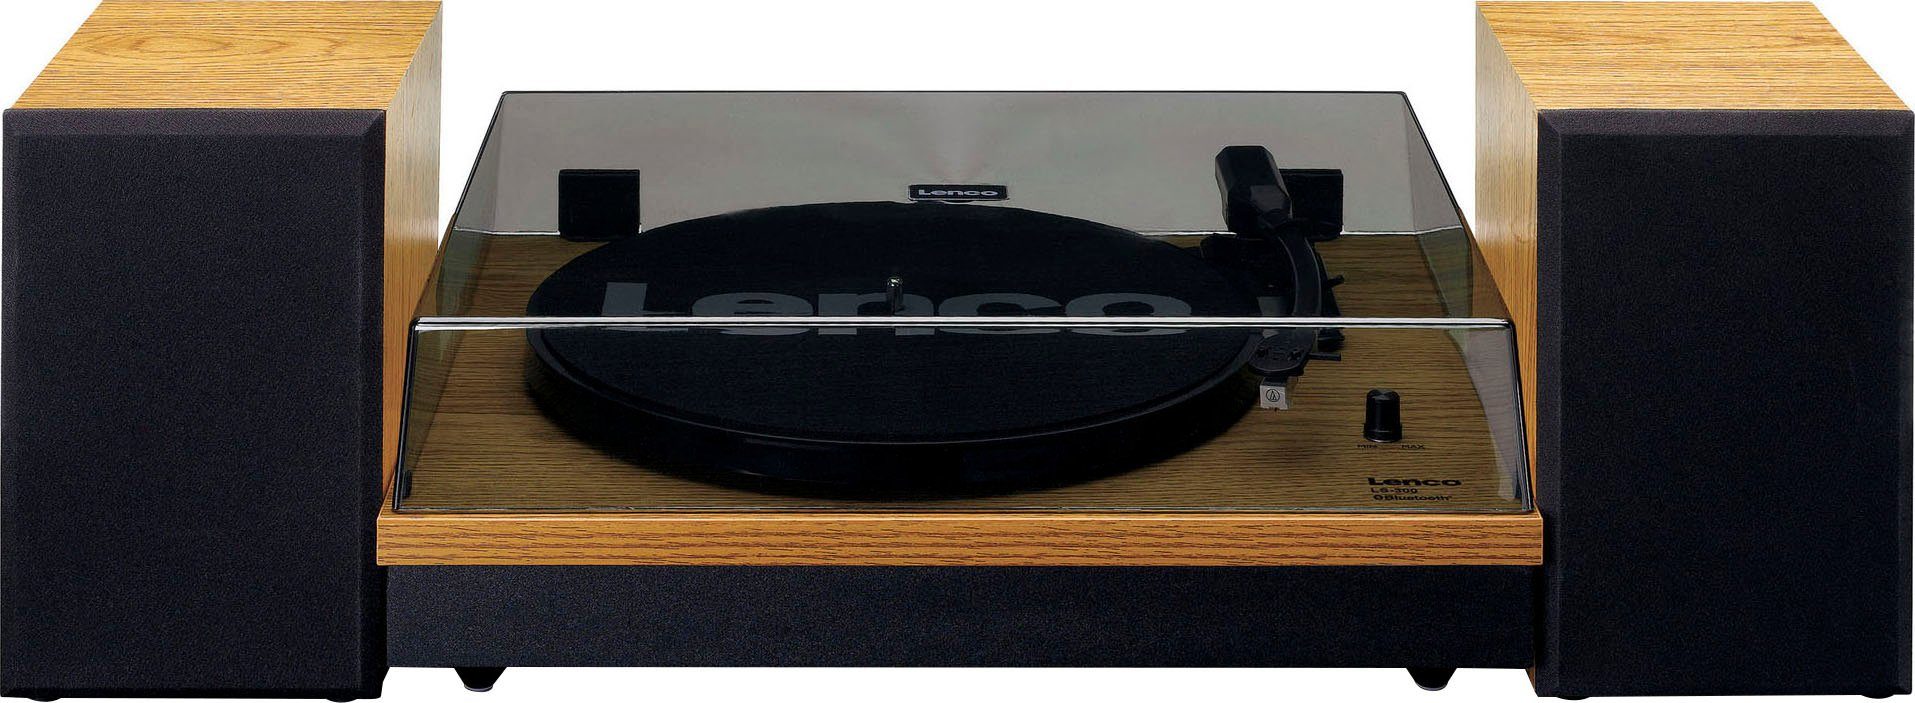 Lenco LS-300WD Plattenspieler ext. Plattenspieler (Riemenantrieb) Holz mit Lautsprechern